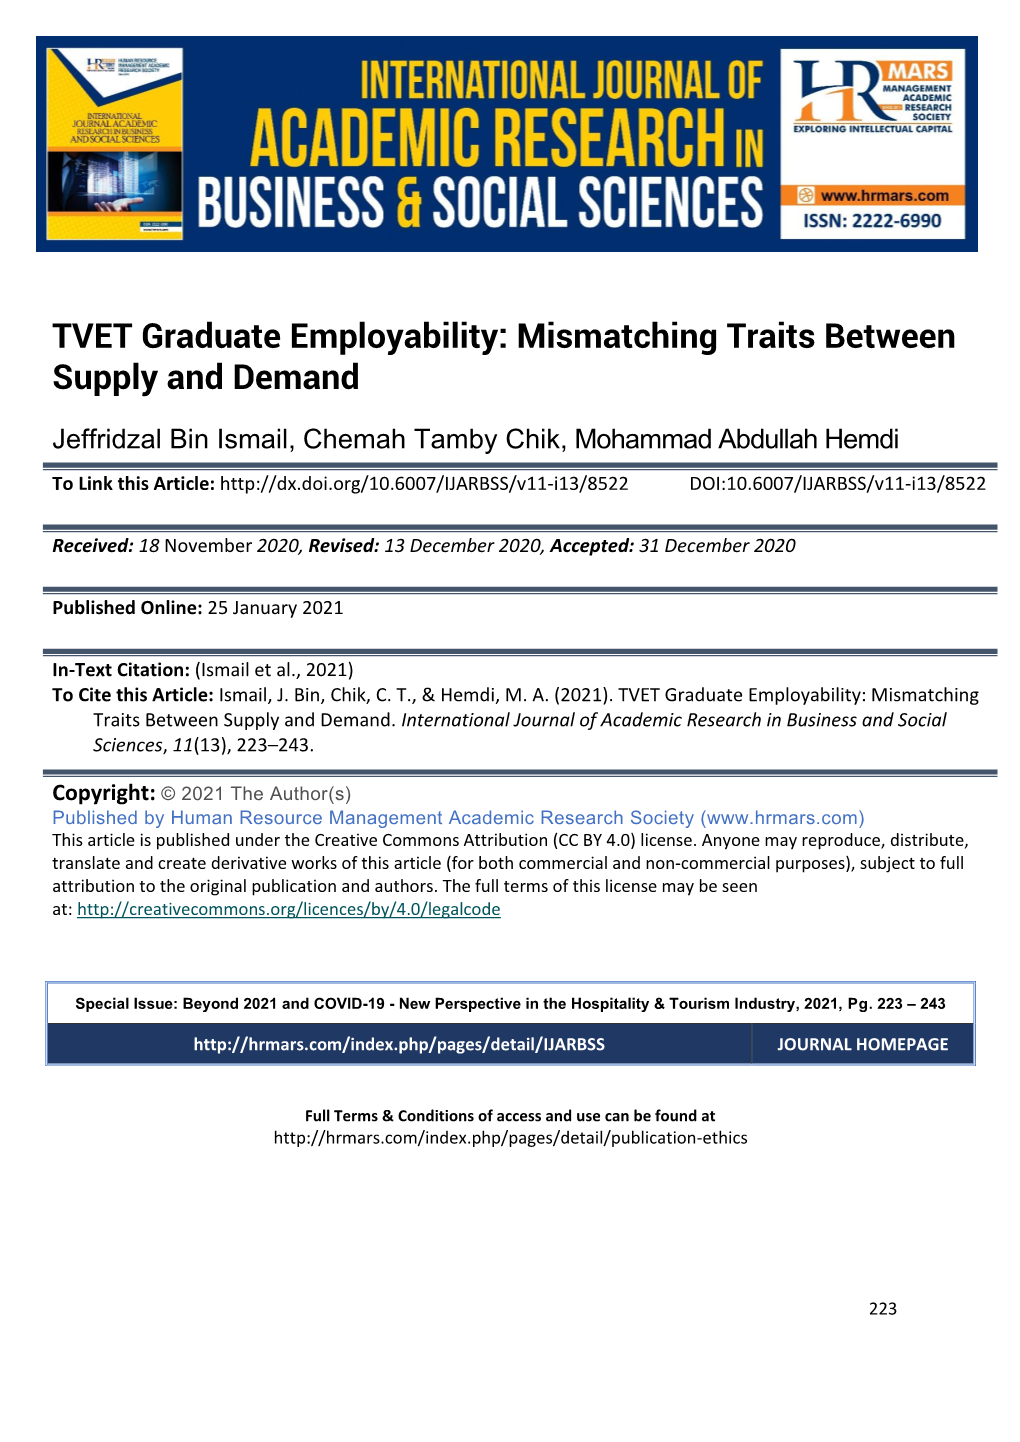 TVET Graduate Employability: Mismatching Traits Between Supply and Demand